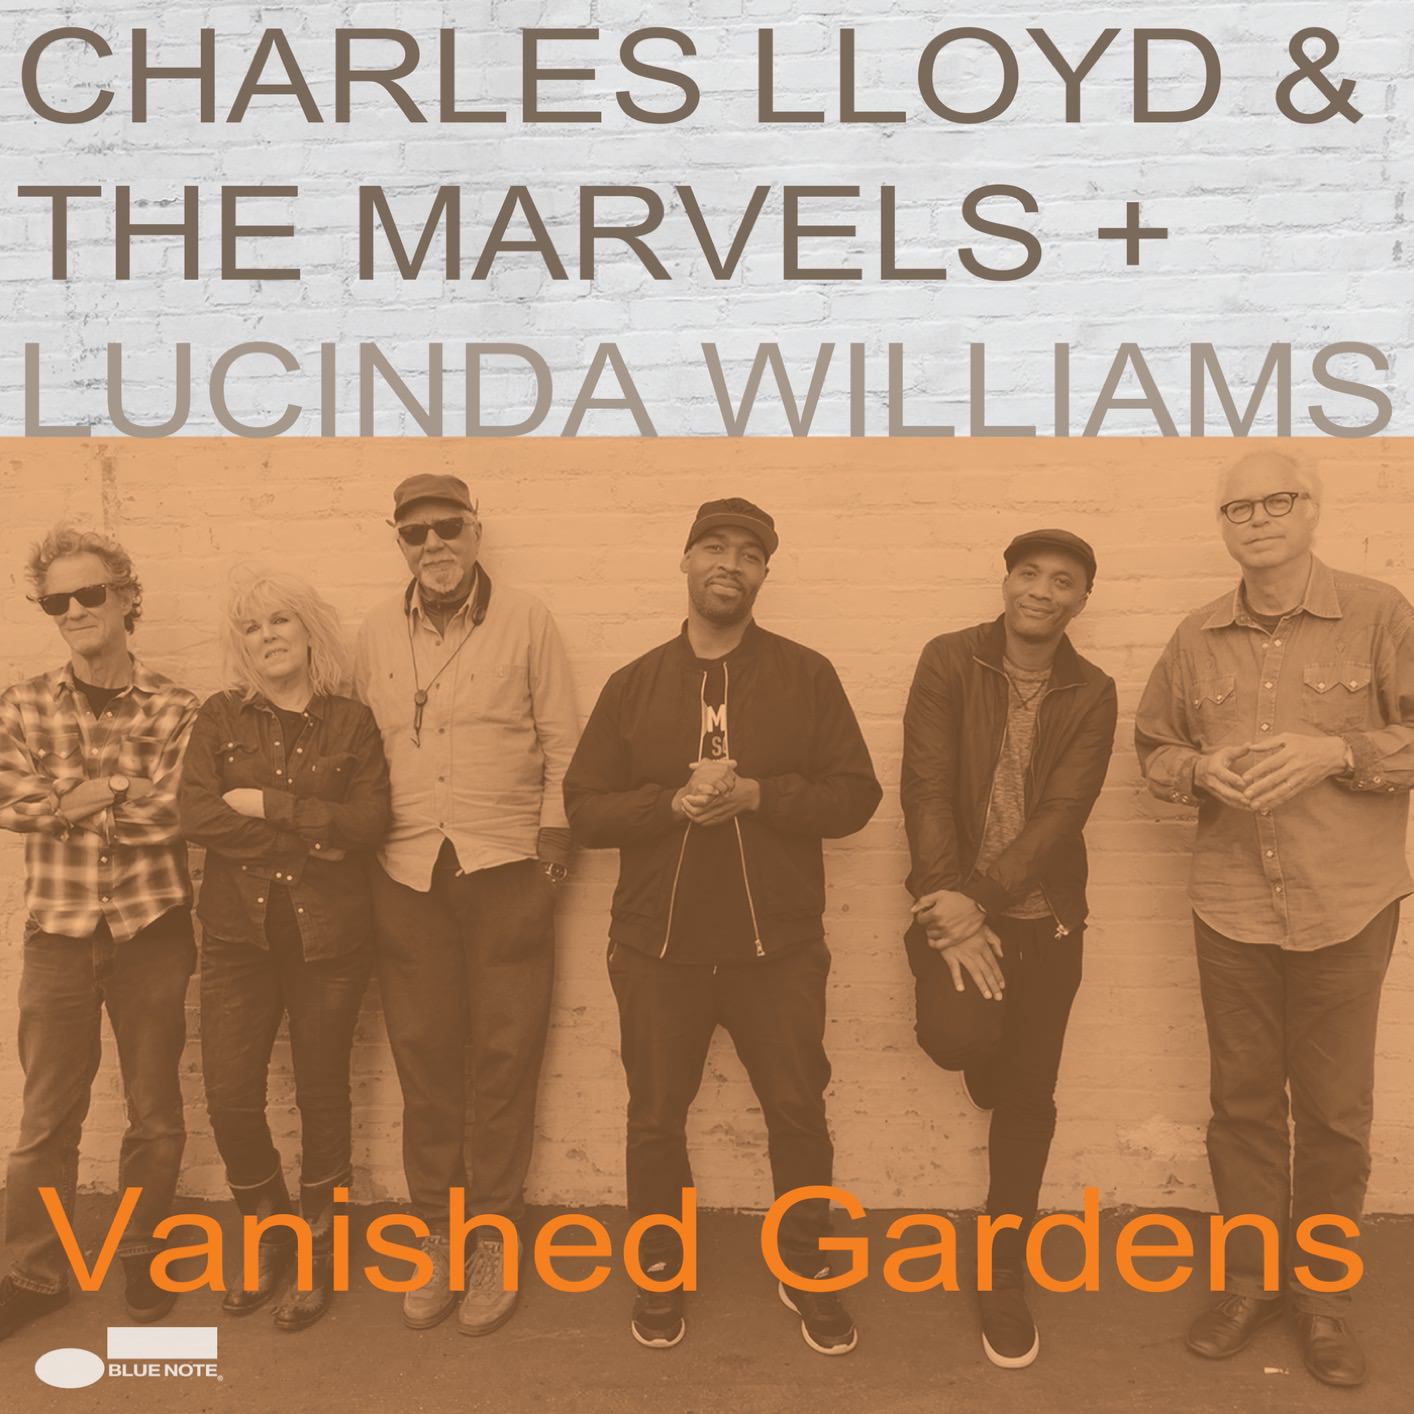 Charles Lloyd & The Marvels + Lucinda Williams – Vanished Gardens (2018) [FLAC 24bit/96kHz]